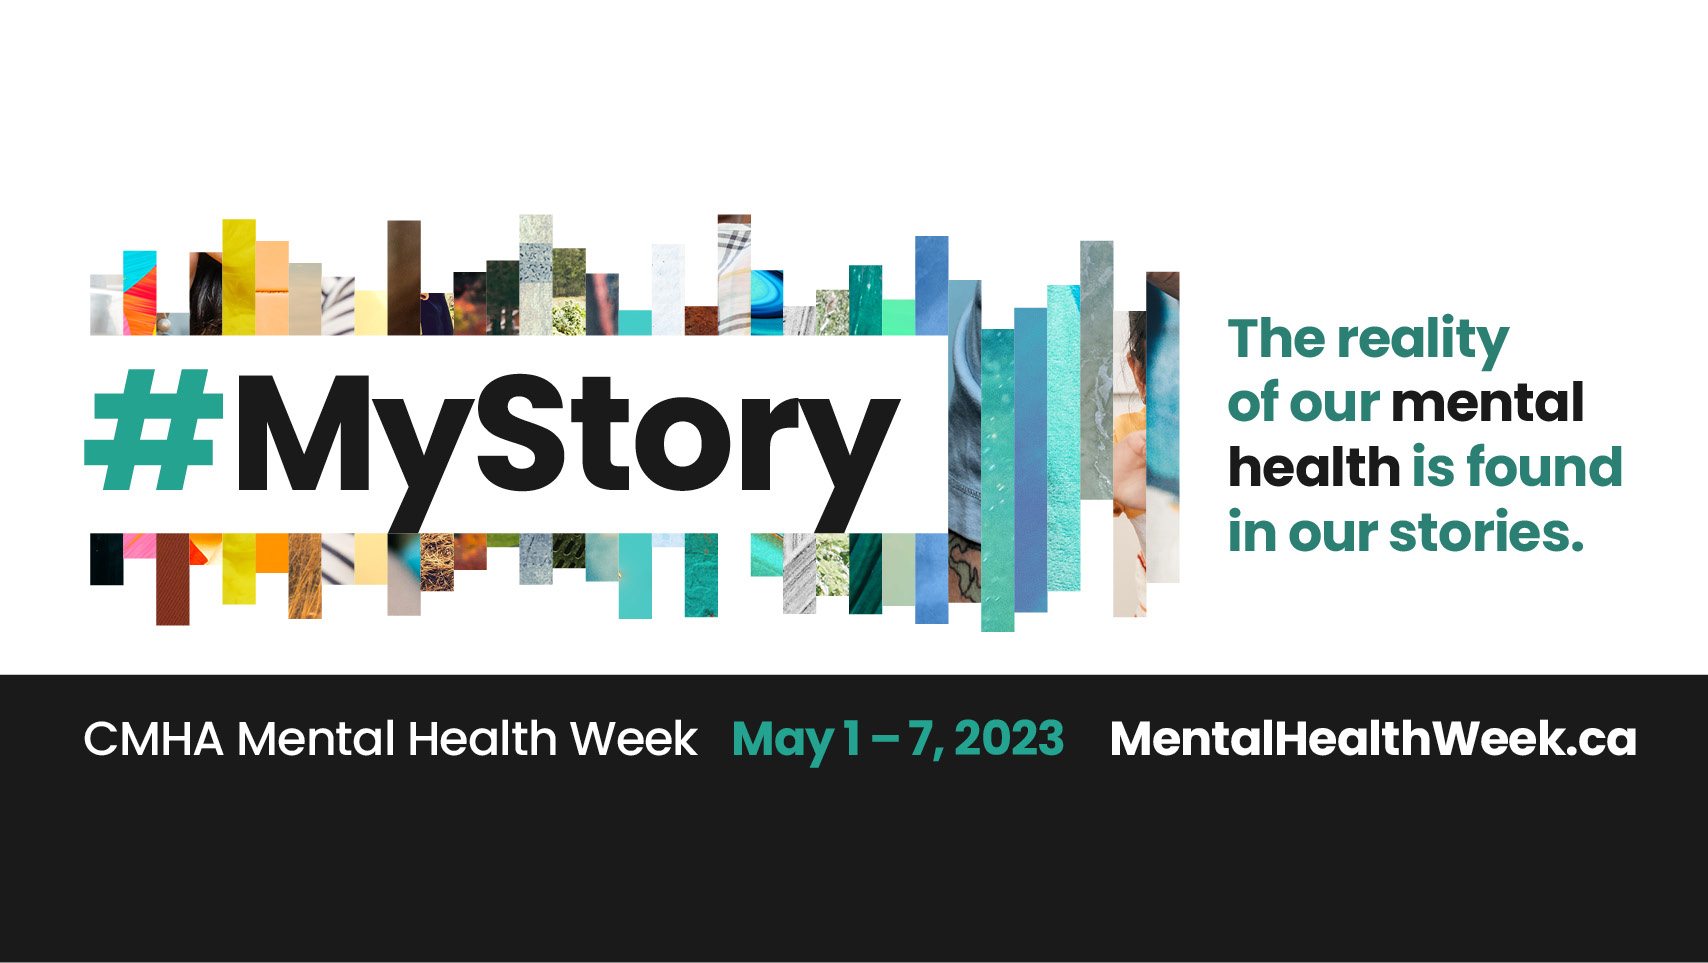 CMHA Mental Health Week 2023 #MyStory